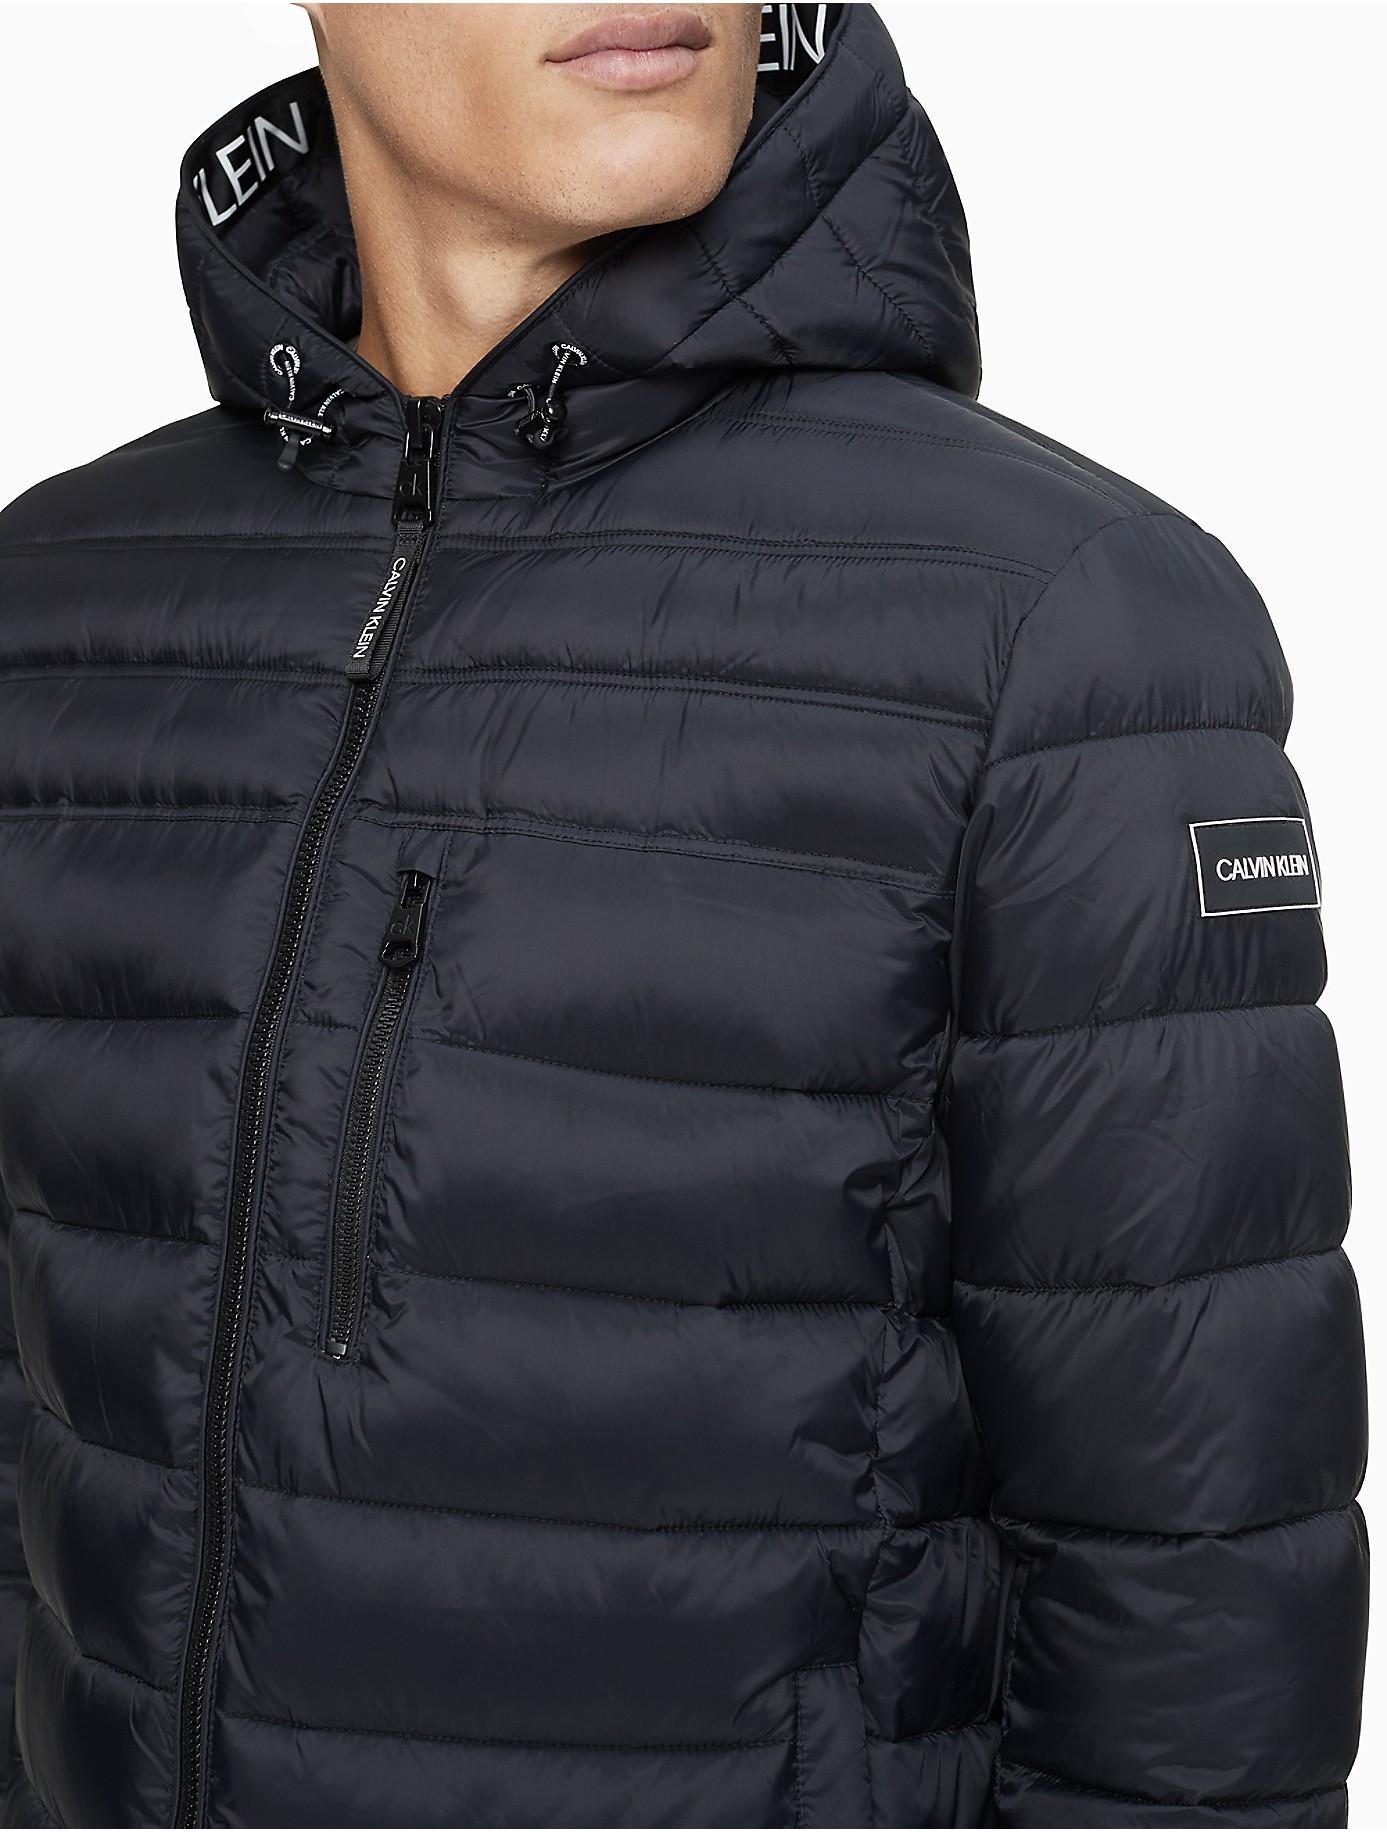 Introducir 58+ imagen calvin klein hooded packable jacket